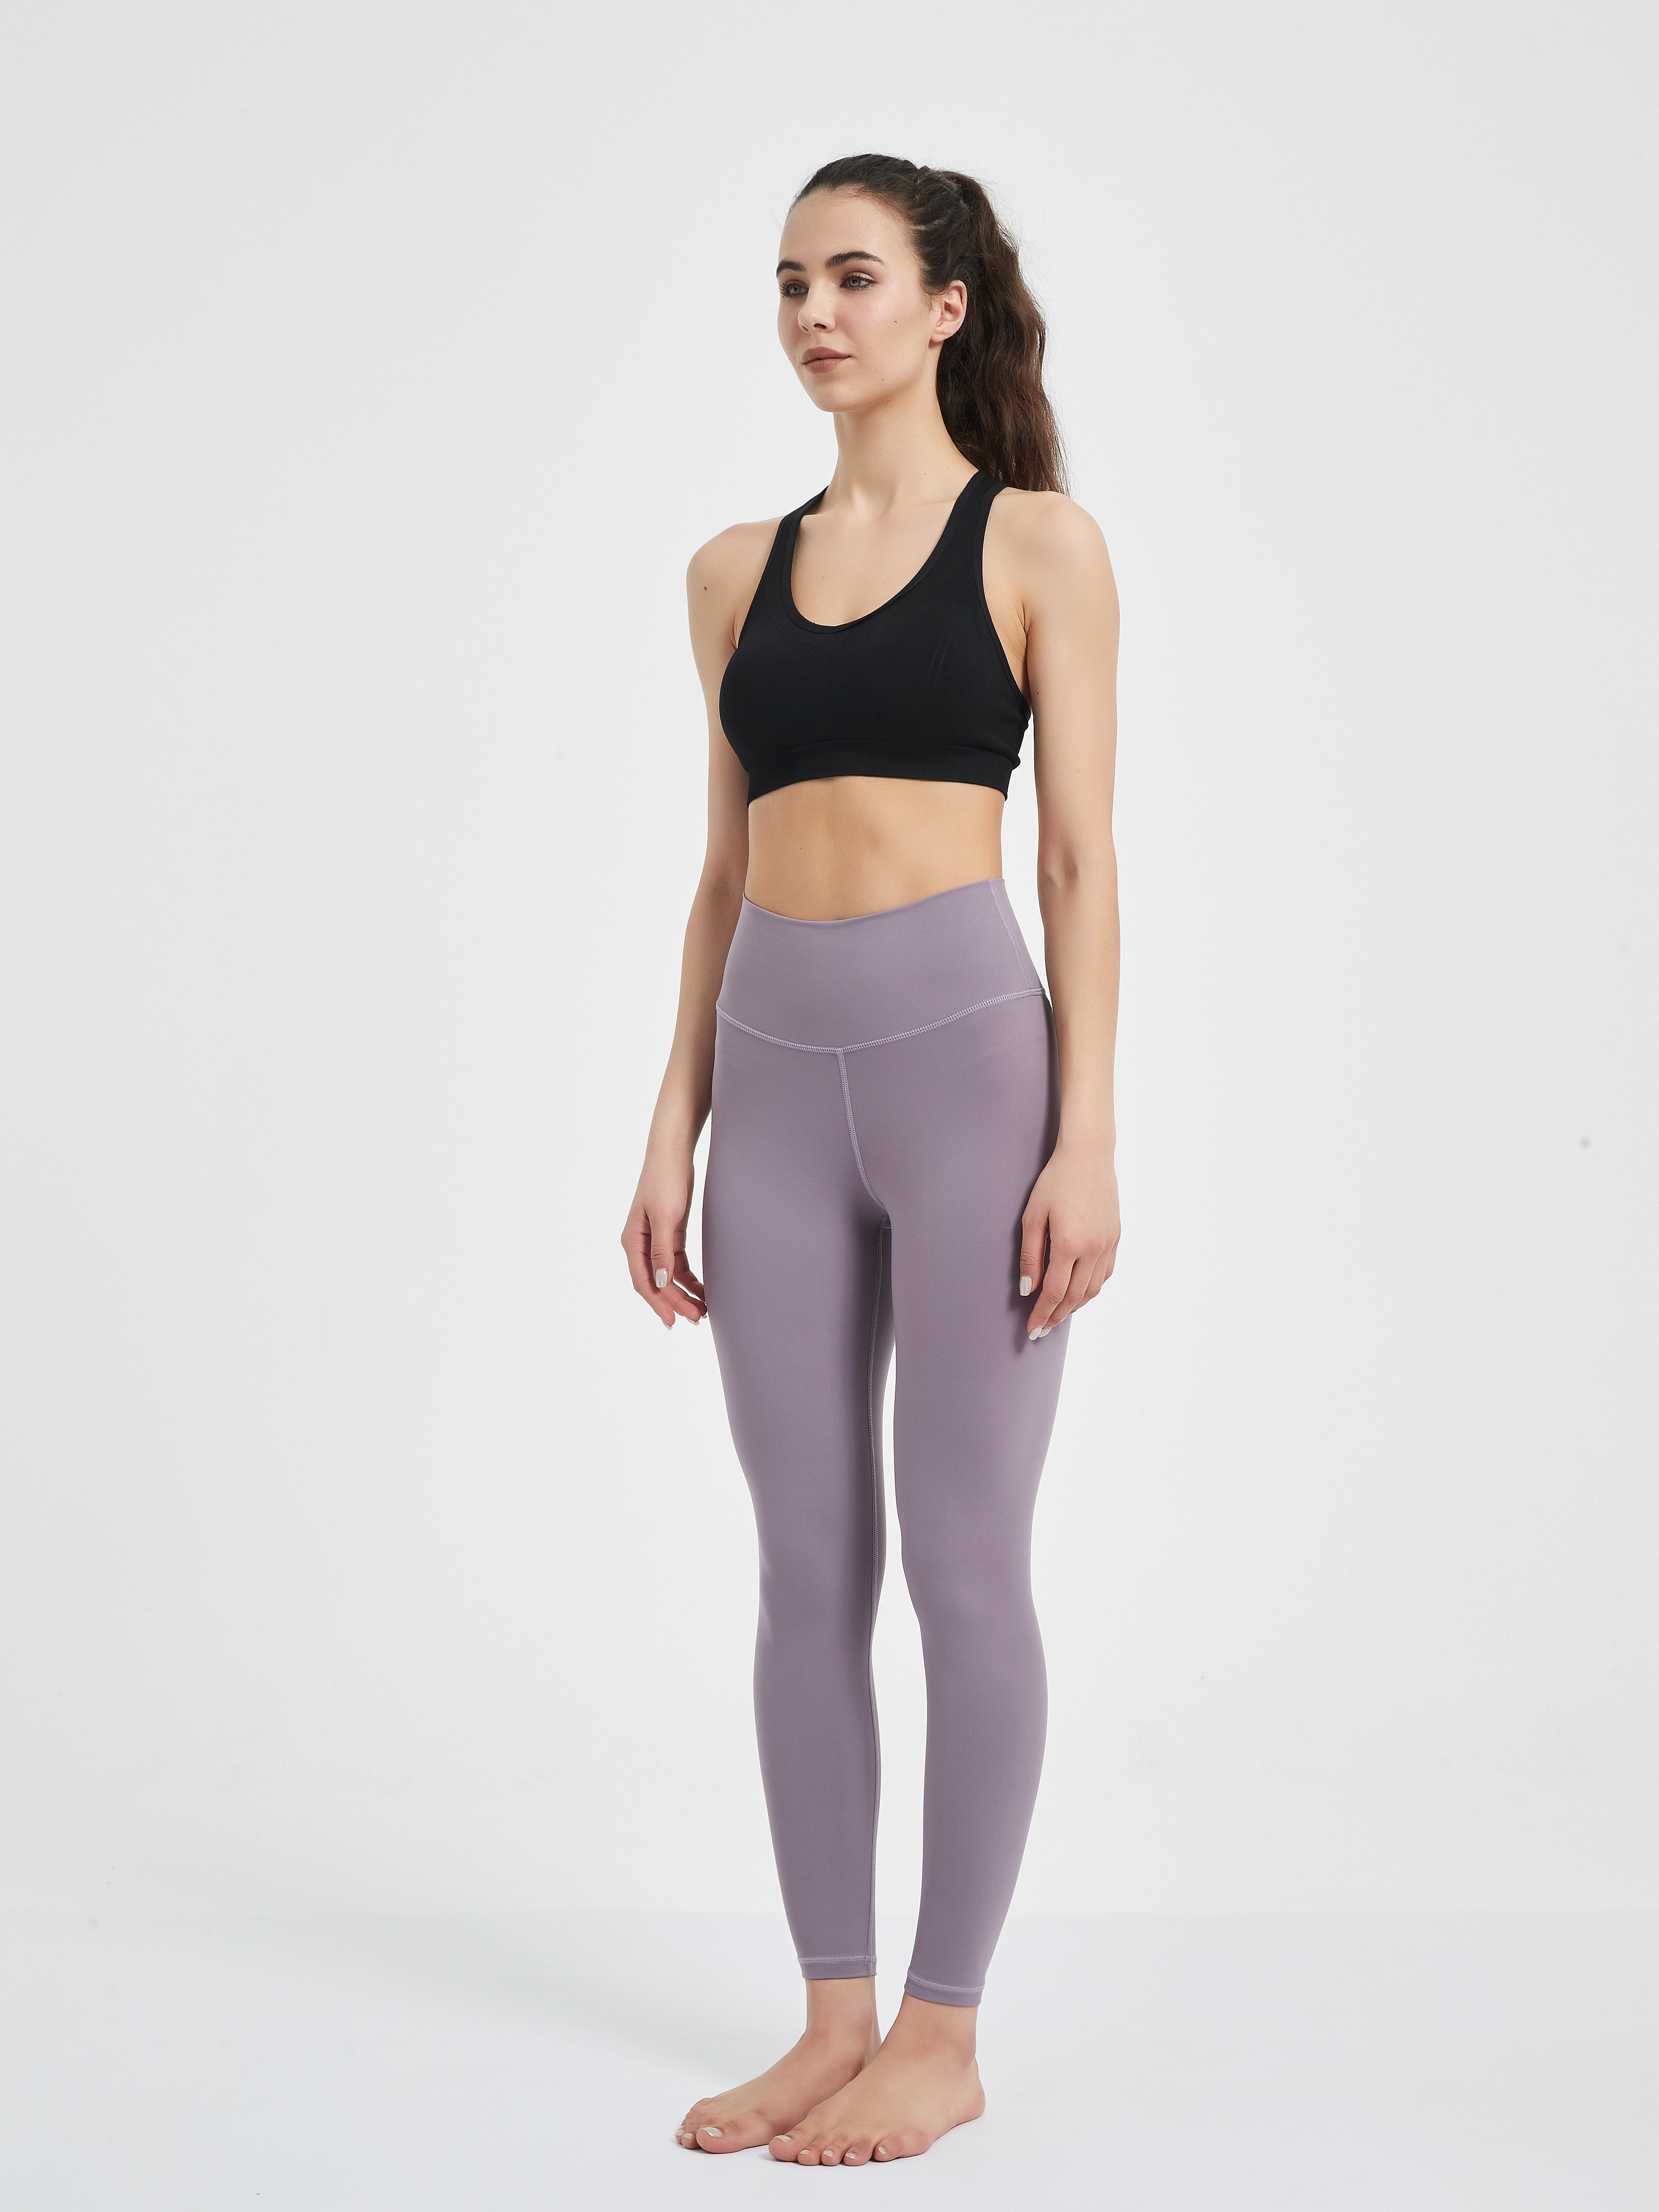 Lululemon 28” align leggings light purple